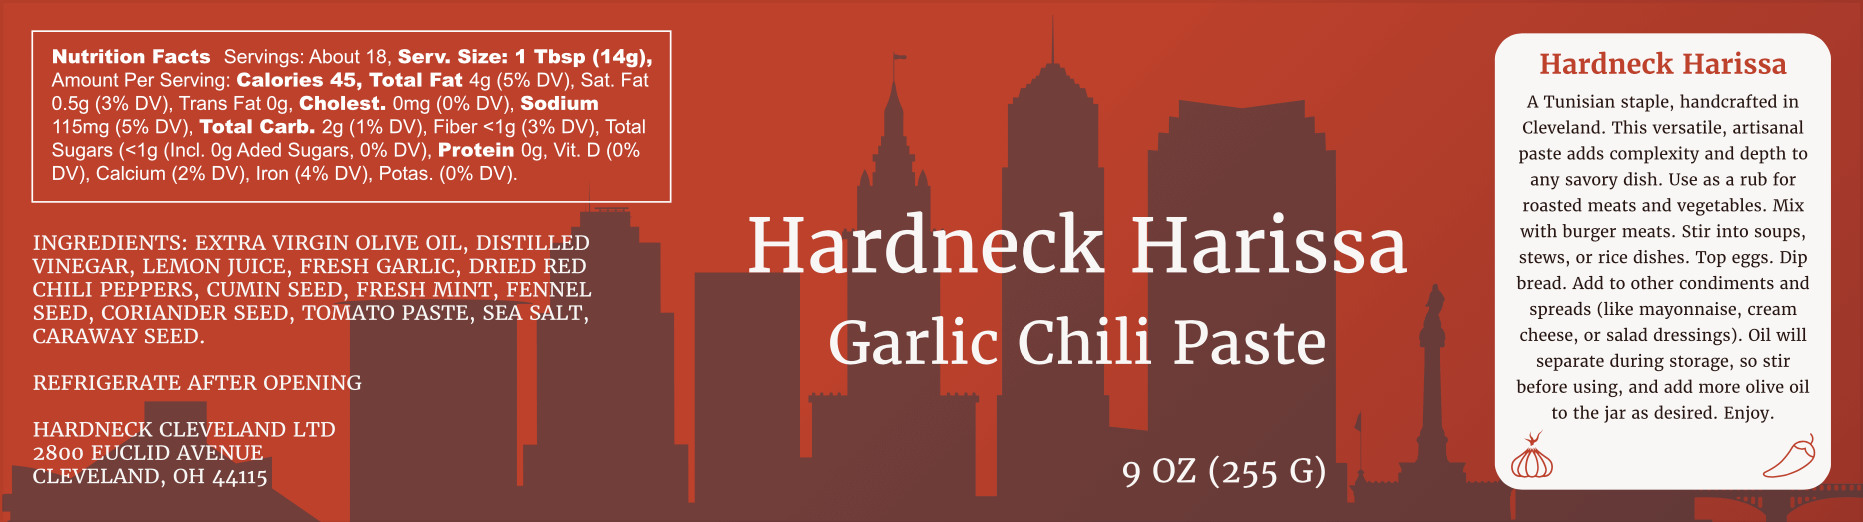 final jar label design for the hardneck harissa garlic chili paste